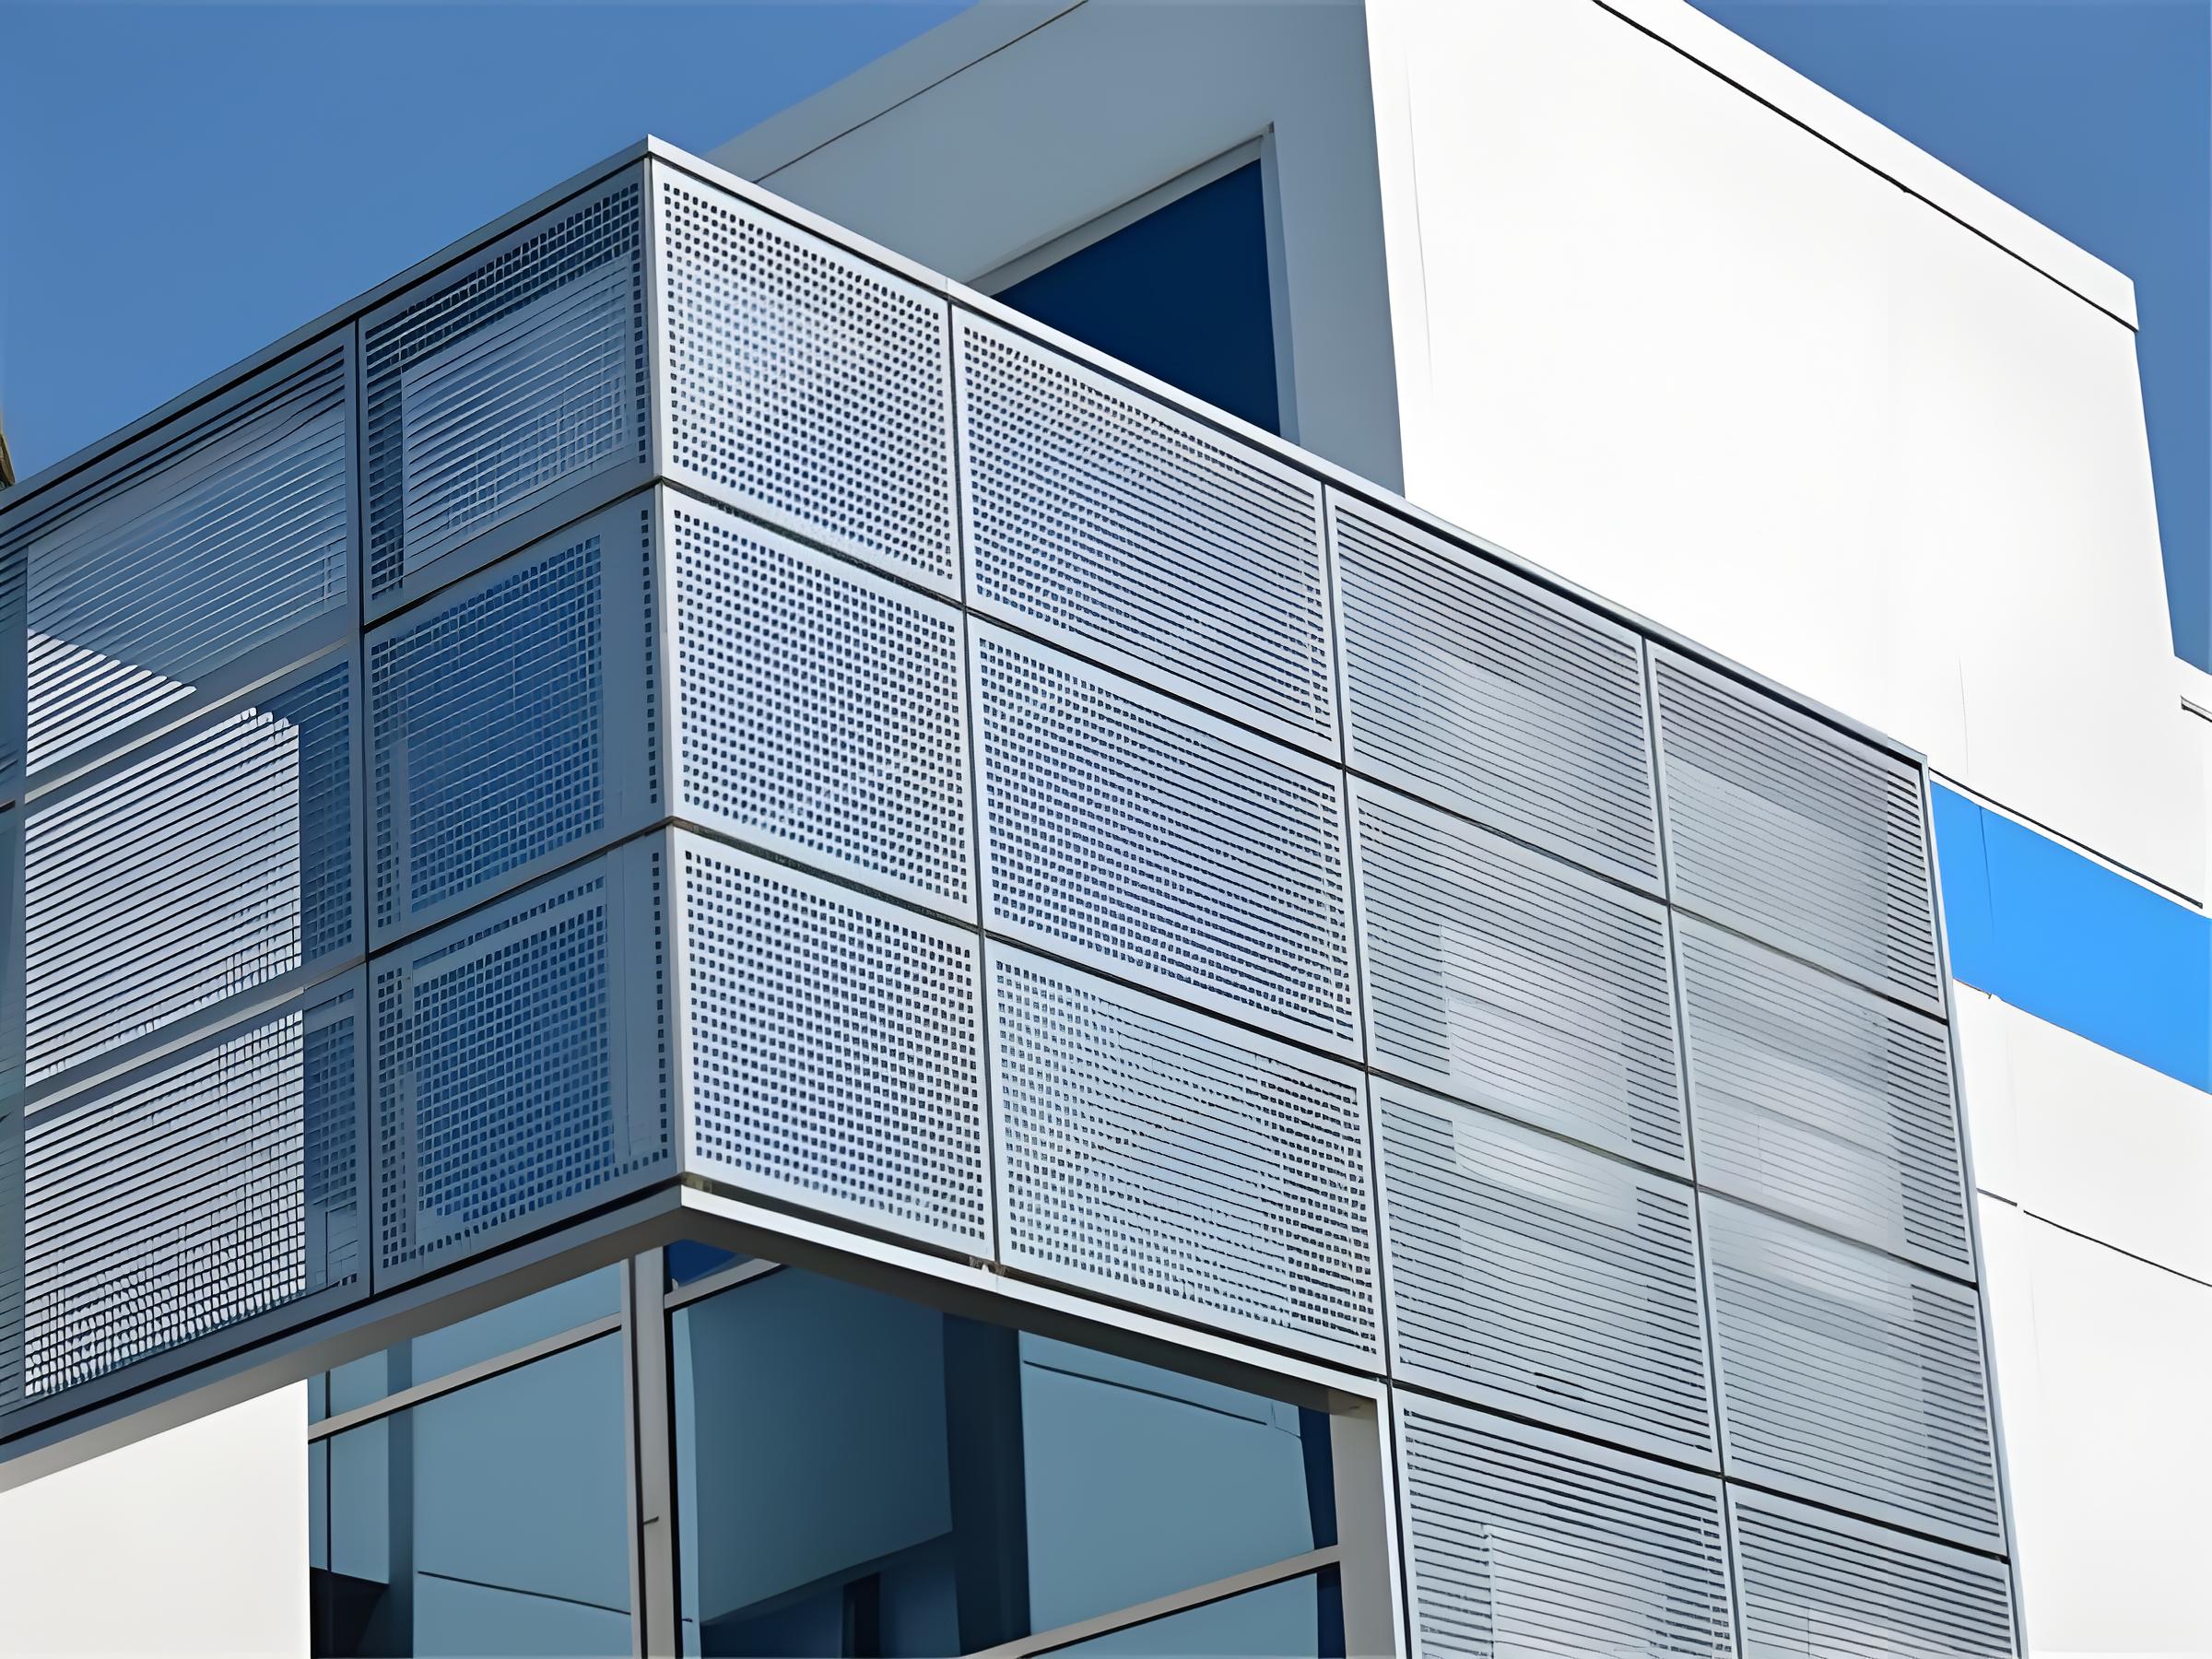 Decorative aluminum wall cladding perforated metal exterior panels curtain wall